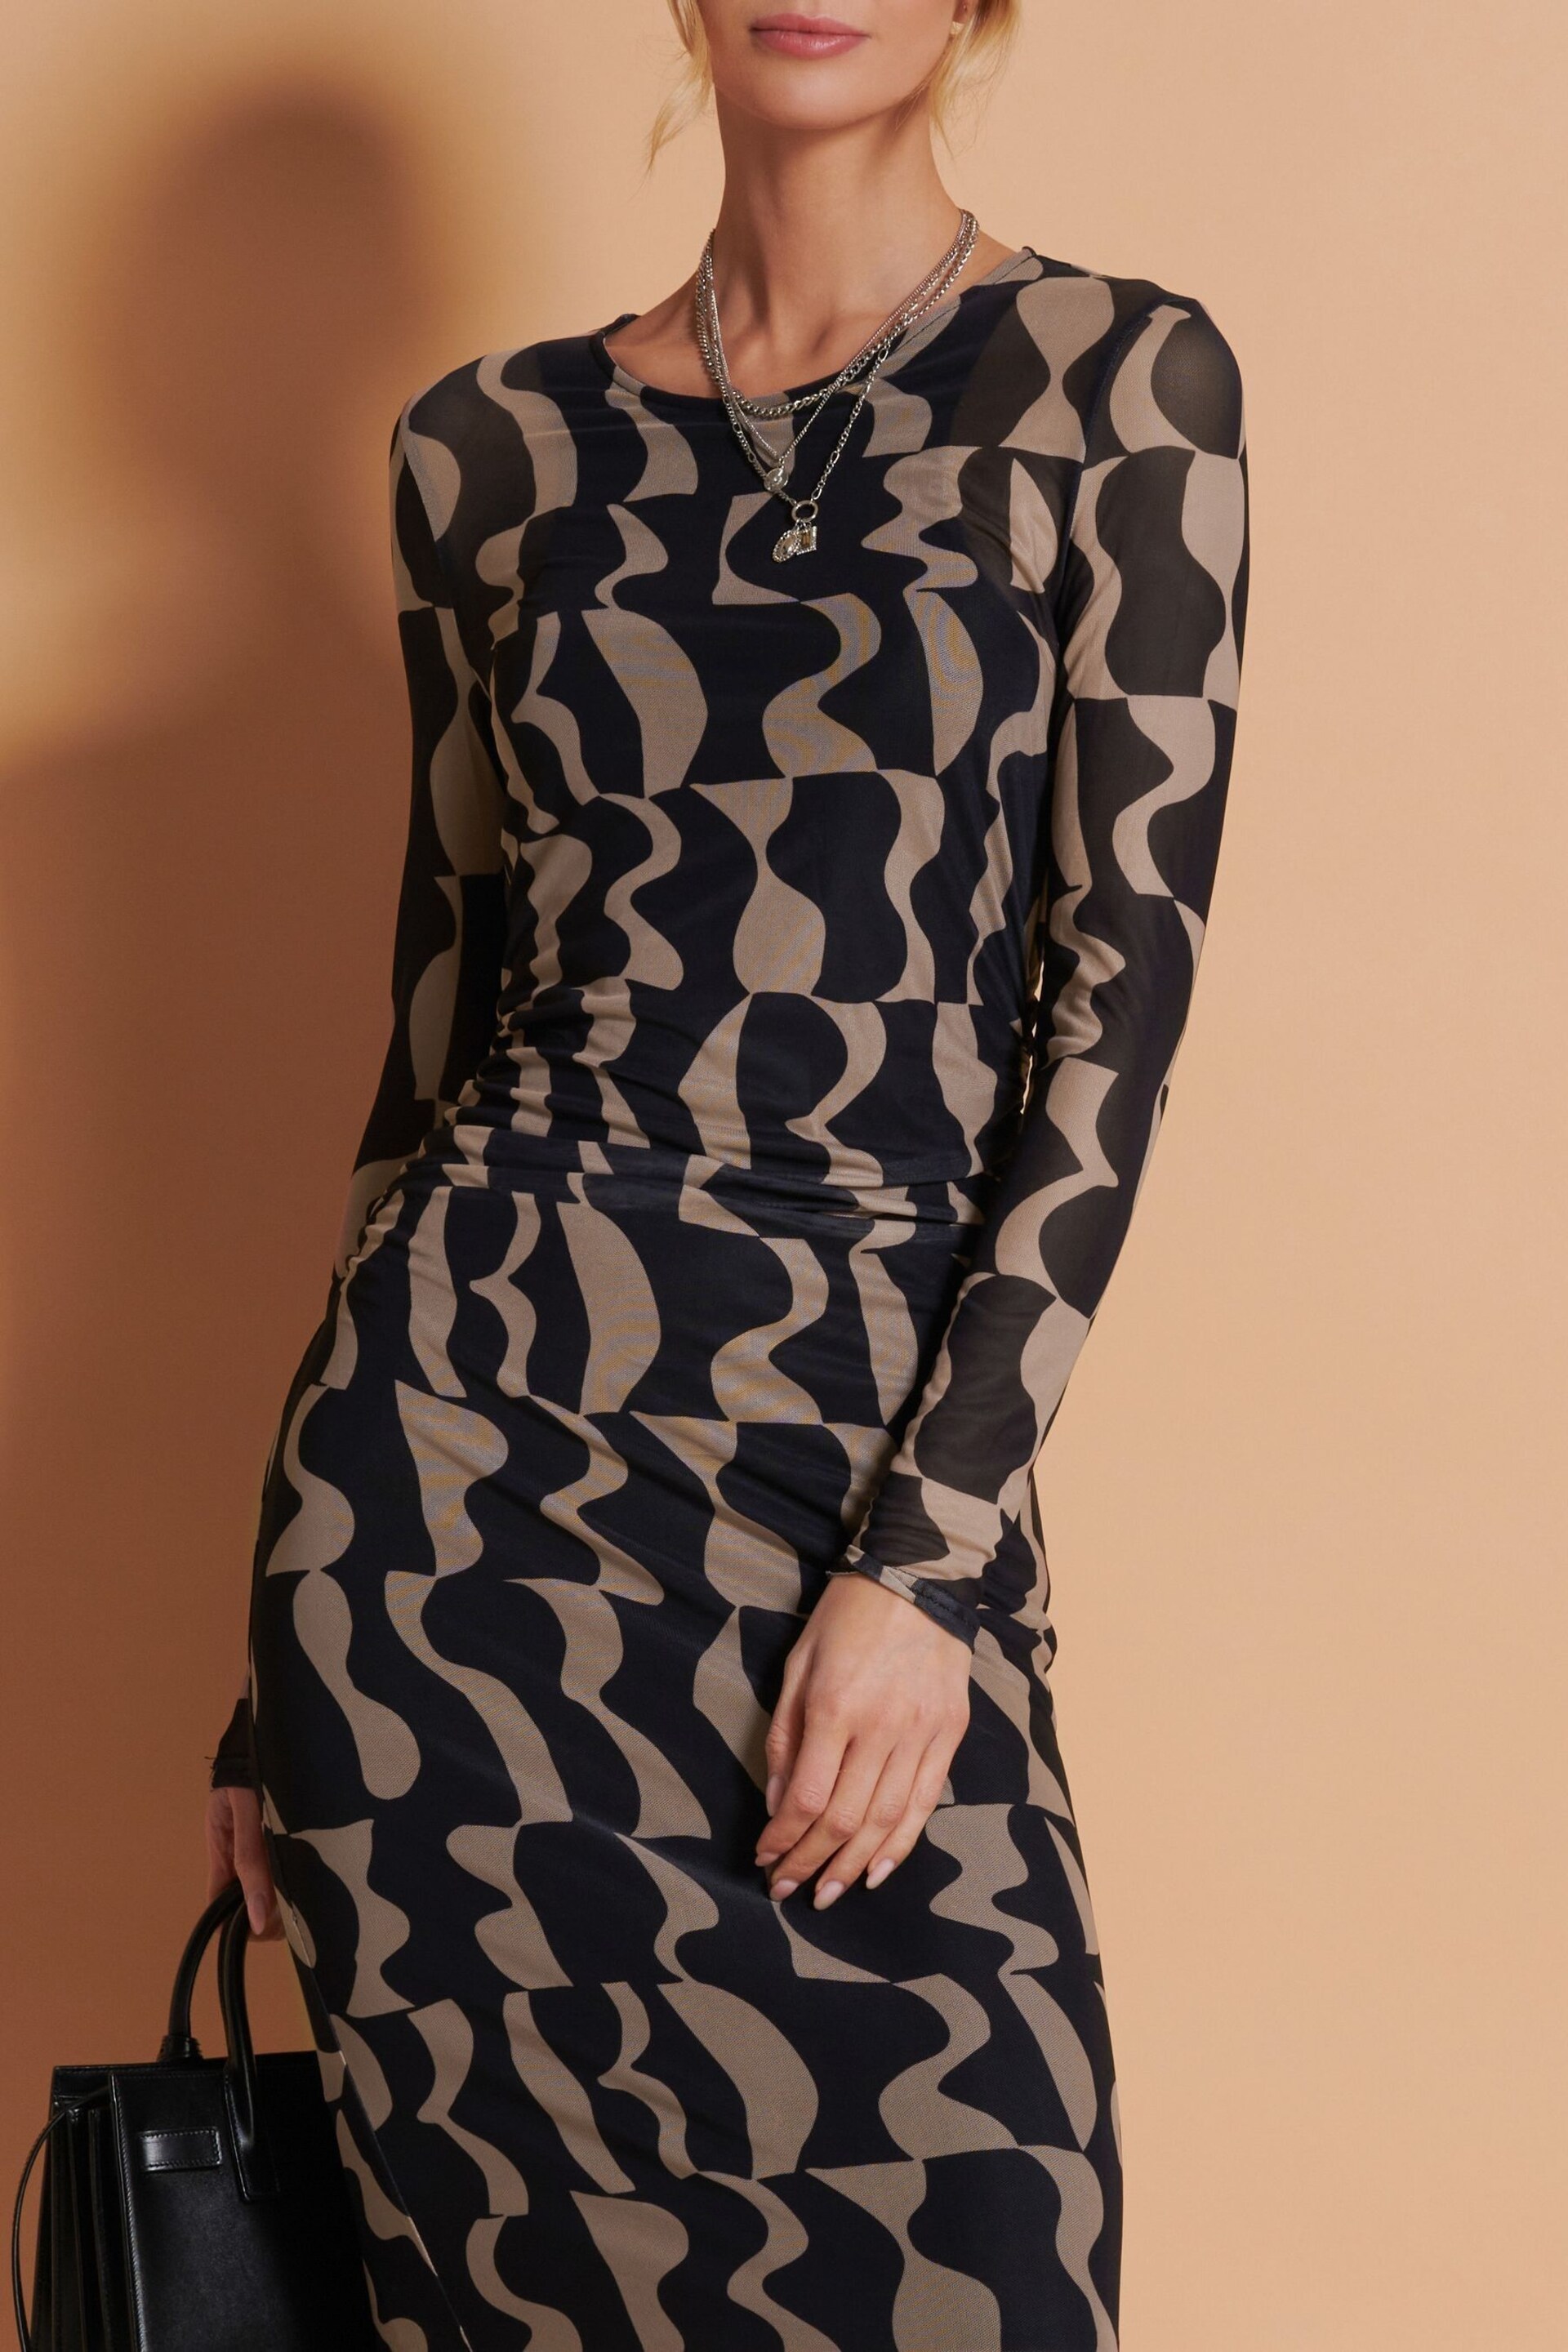 Jolie Moi Black/Brown Print Long Sleeve Mesh Bodycon Dress - Image 6 of 6